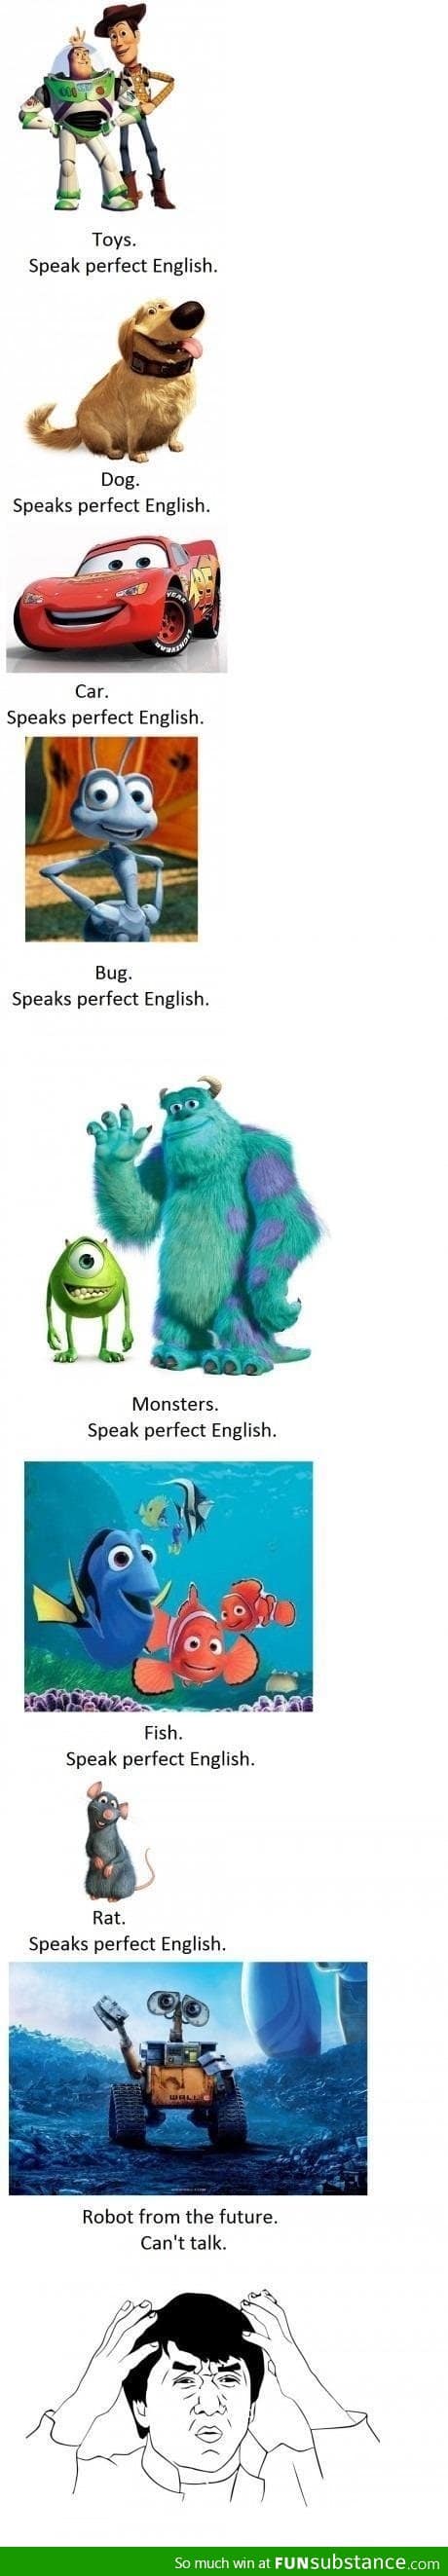 Disney Pixar Makes No Sense